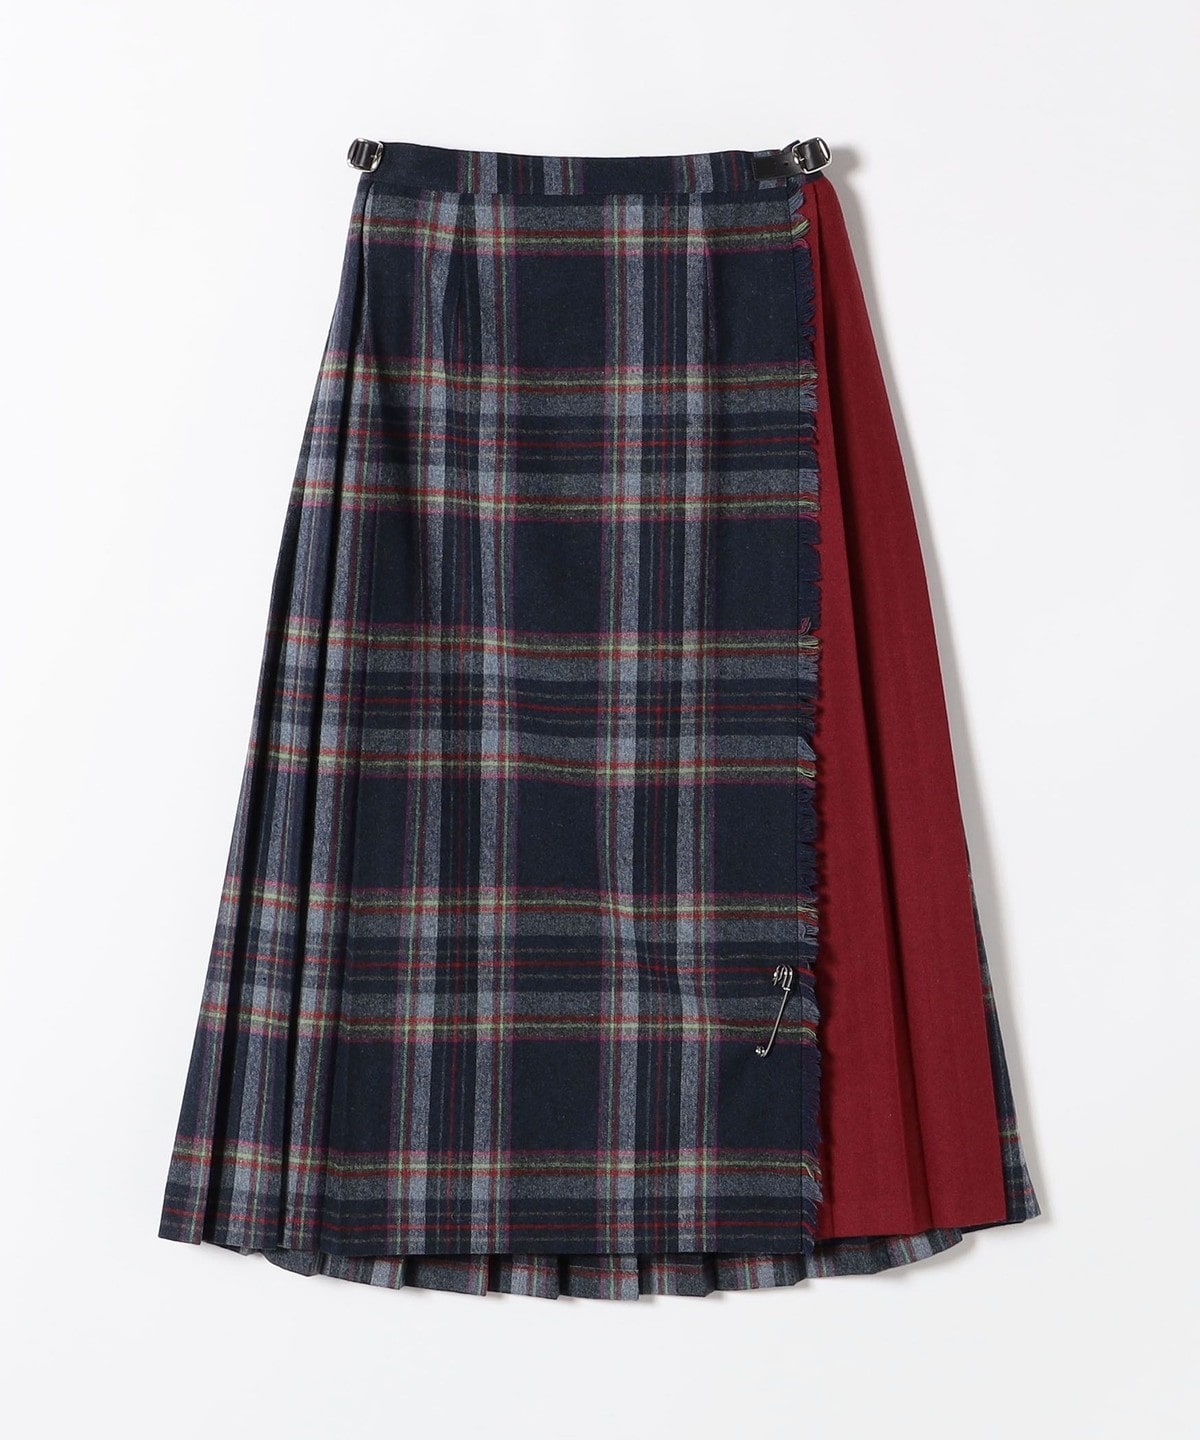 O'NEIL OF DUBLIN: コンビ キルト スカート 23AW (83cm): スカート